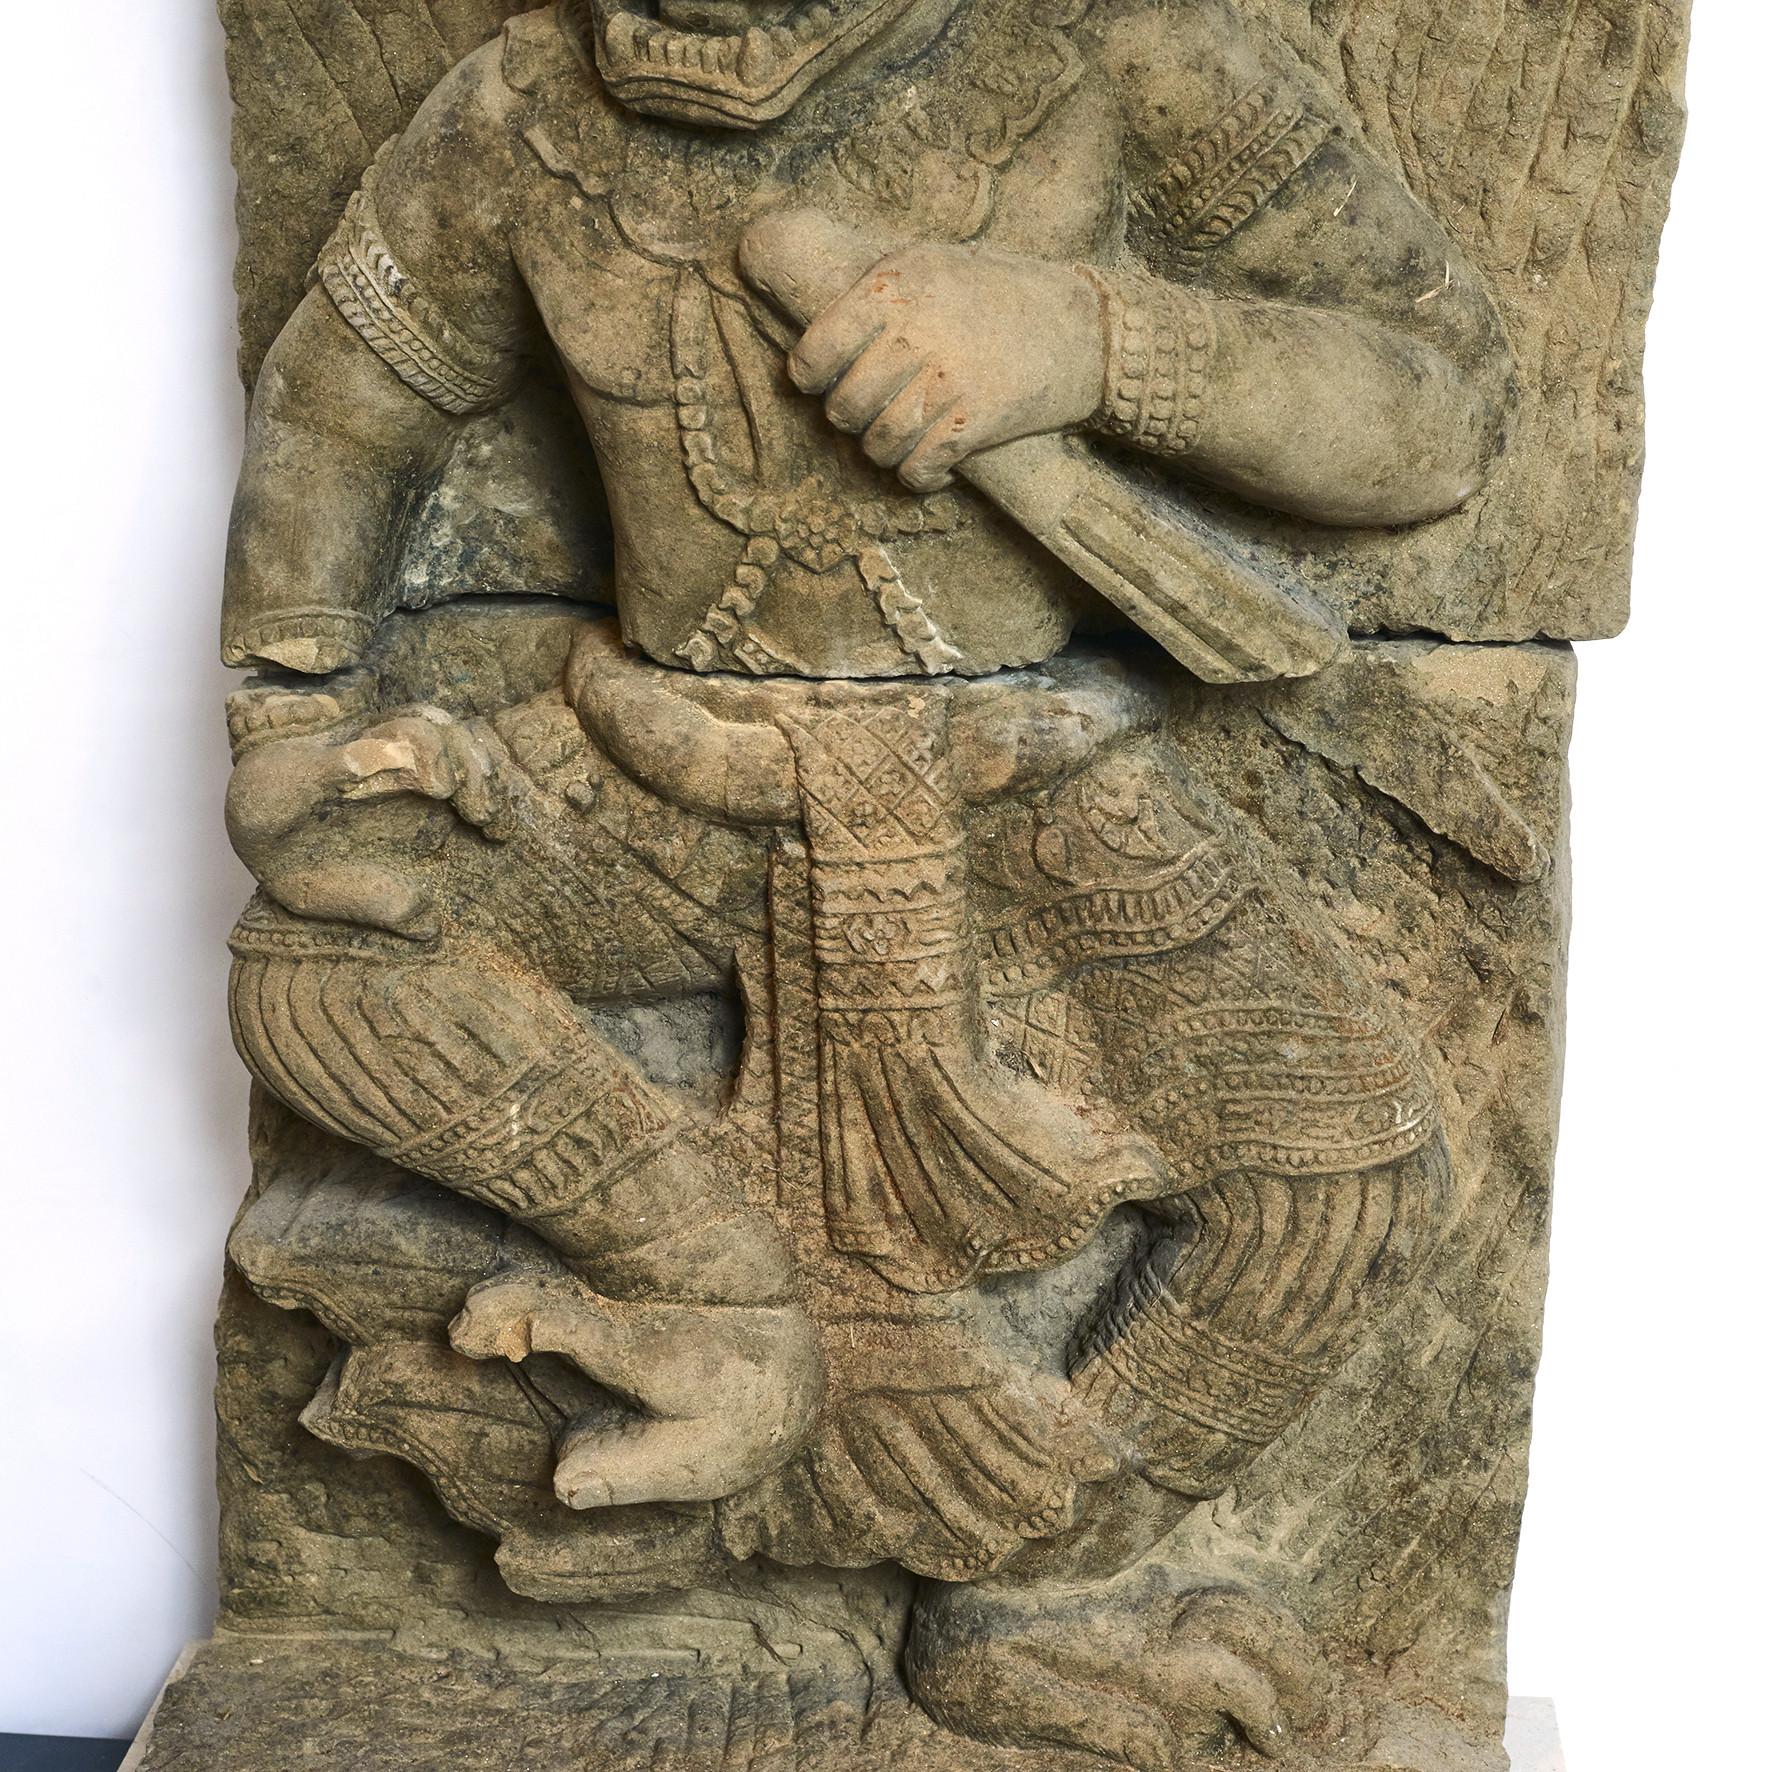 Other 500-600 Year-Old Sandstone Sculpture of Hanuman, The Monkey God